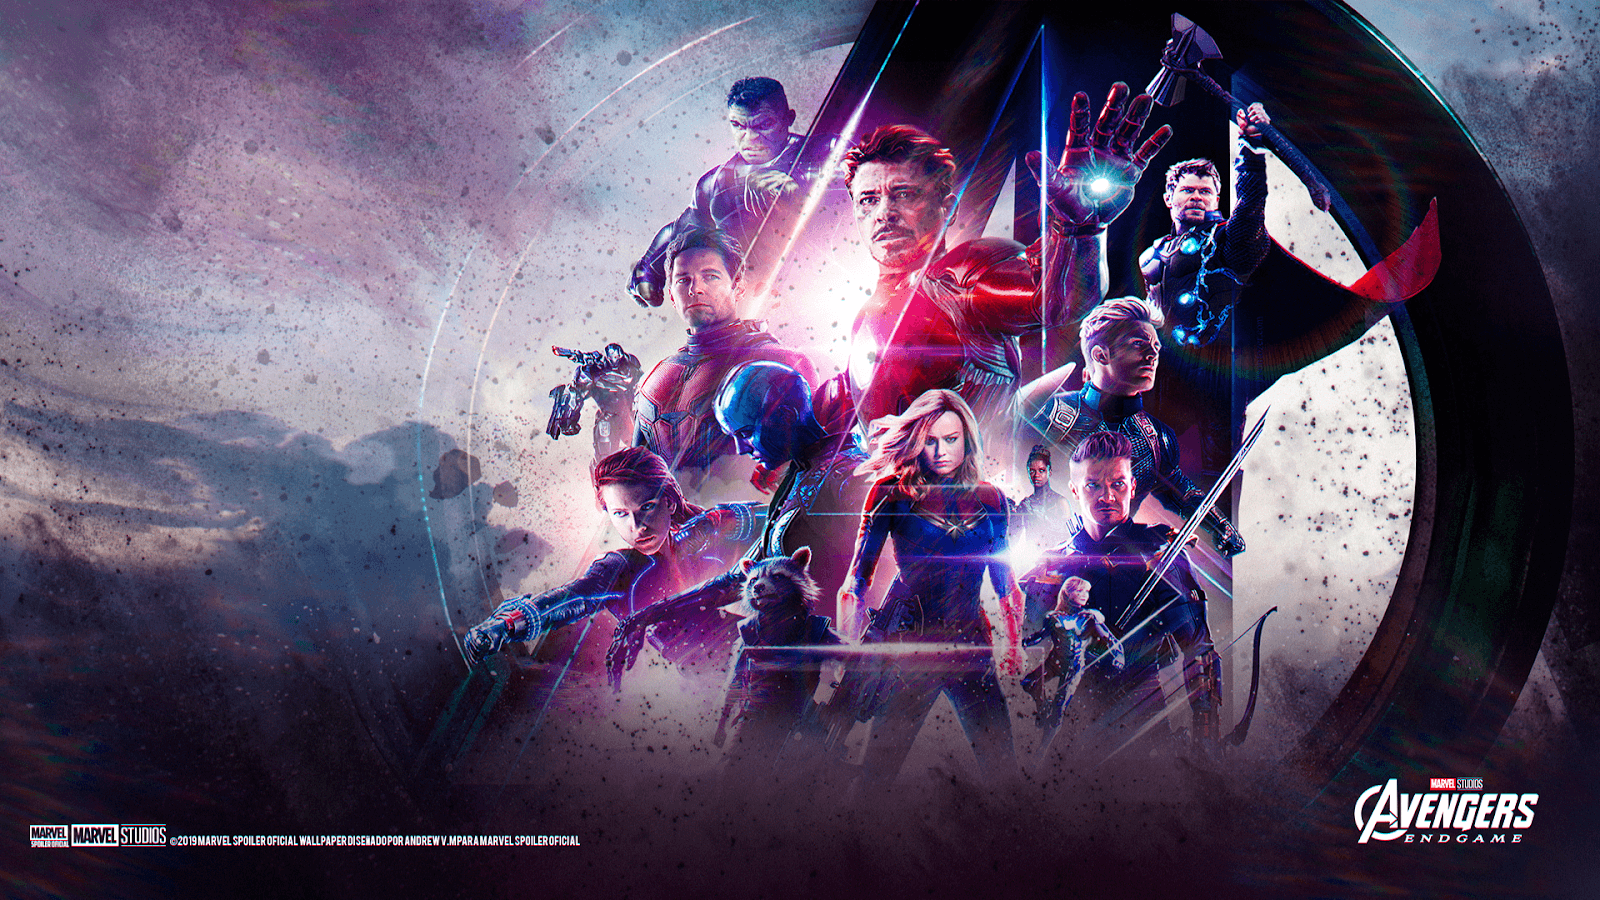 Free download Avengers Endgame Wallpaper HD Movie Stream 4K Online